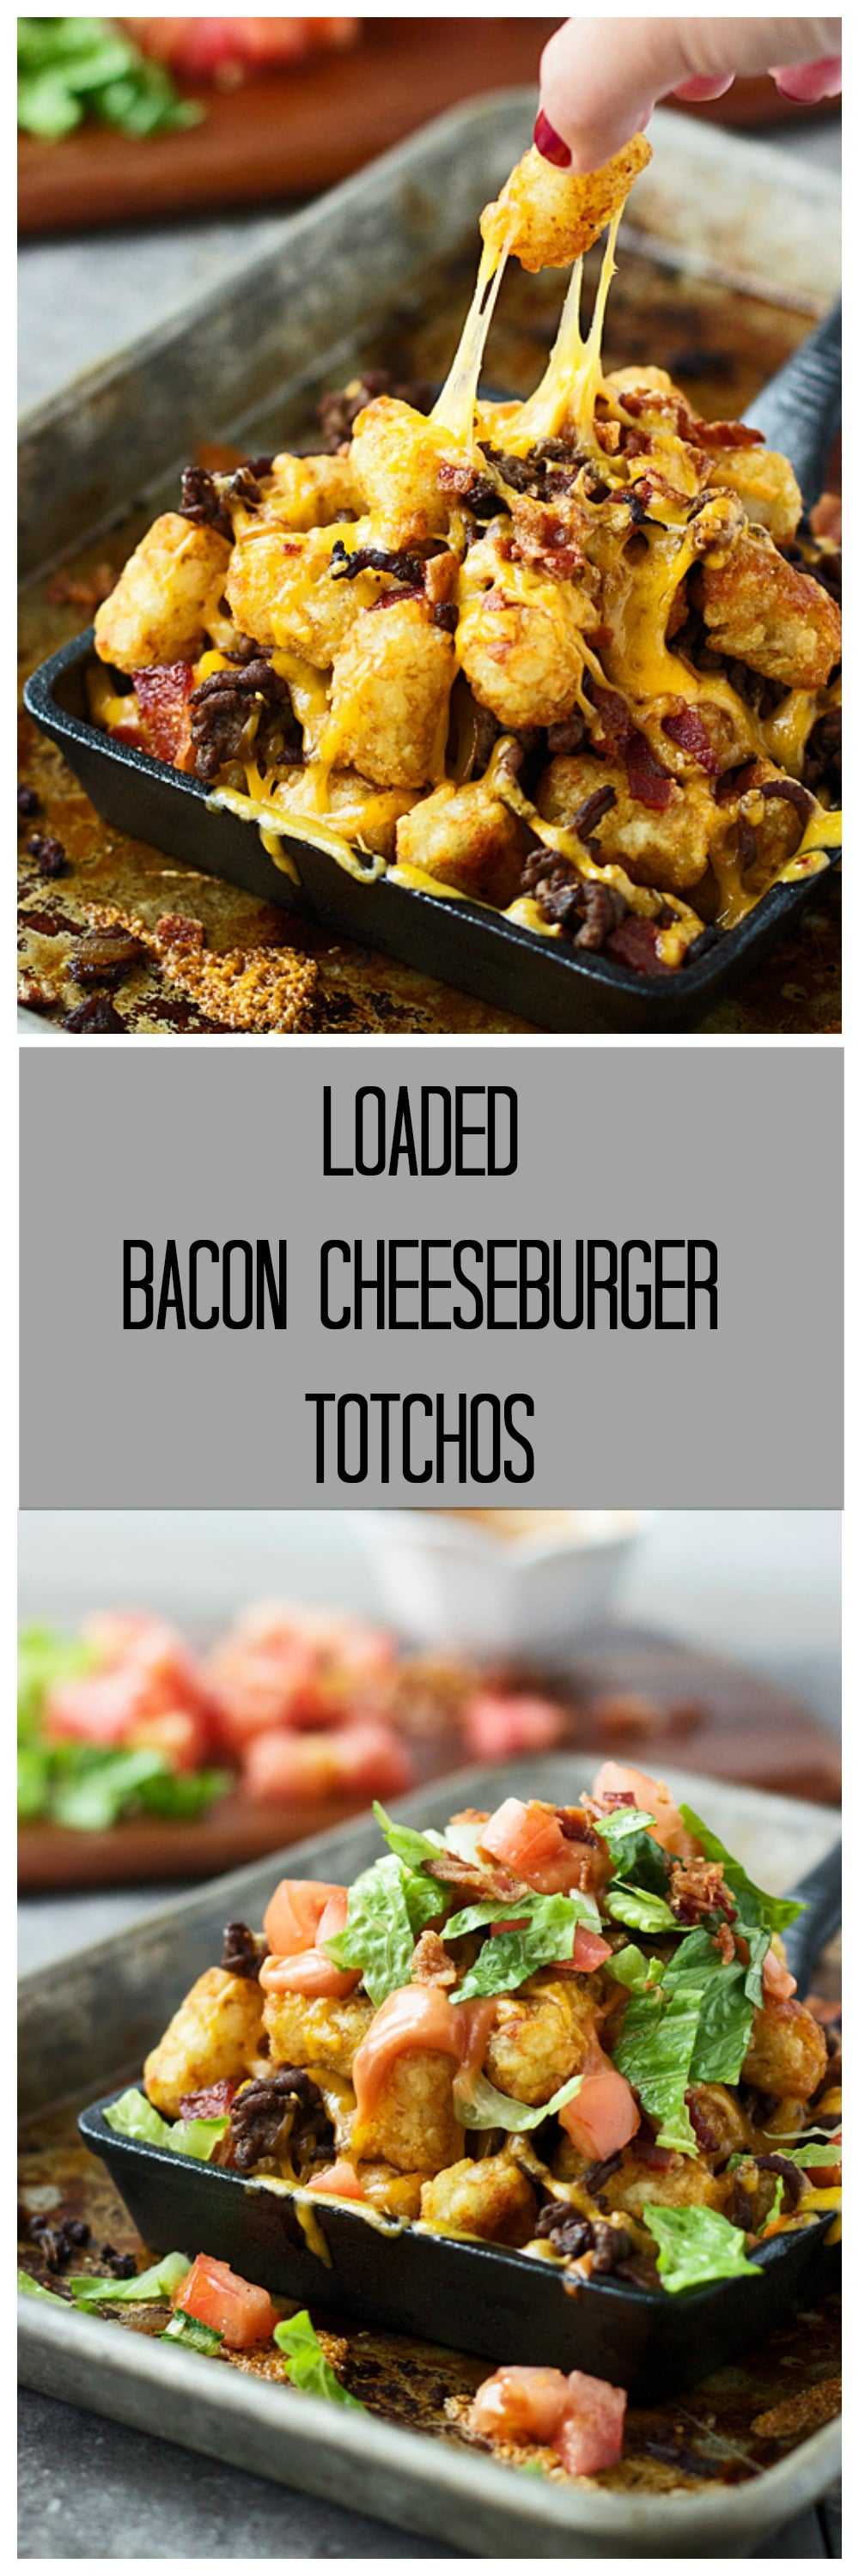 Loaded Bacon Cheeseburger Totchos.